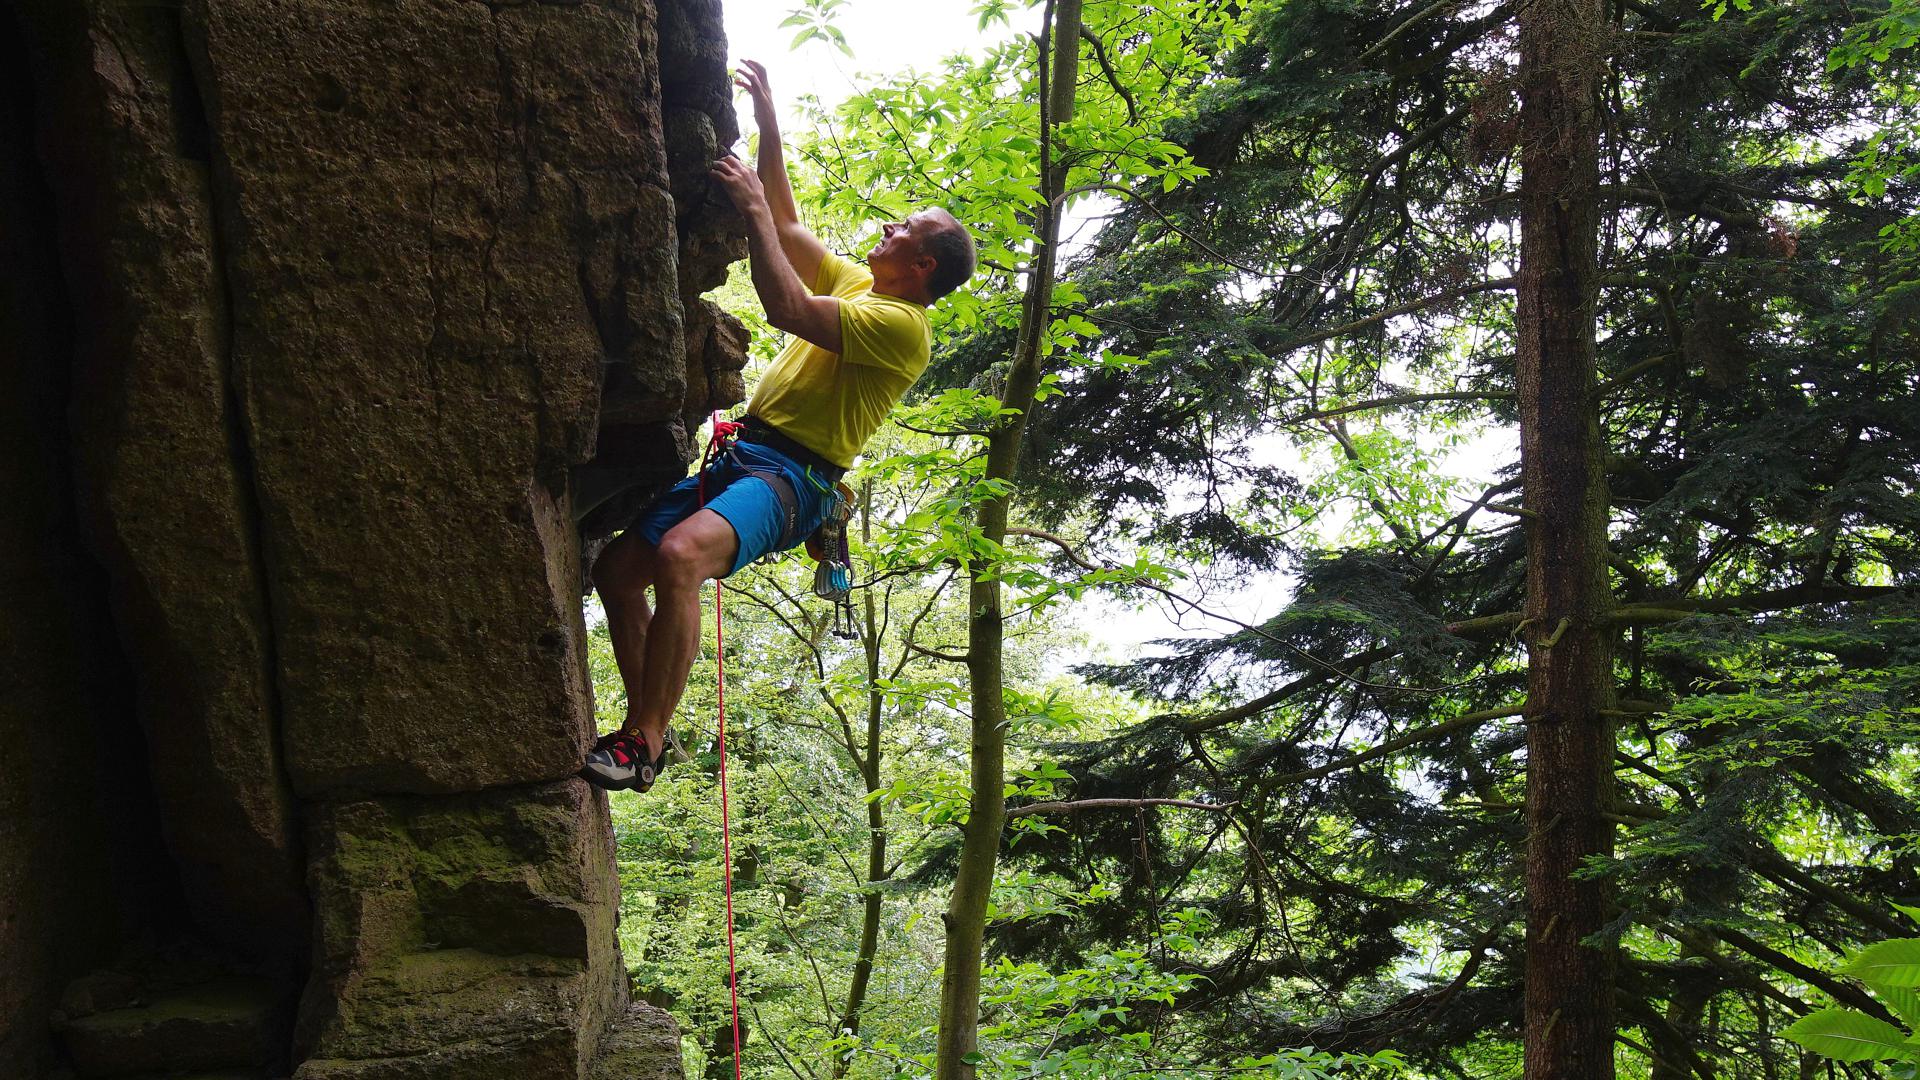 Bergsteiger Ralf Dujmovits klettert einen Felsen hoch.